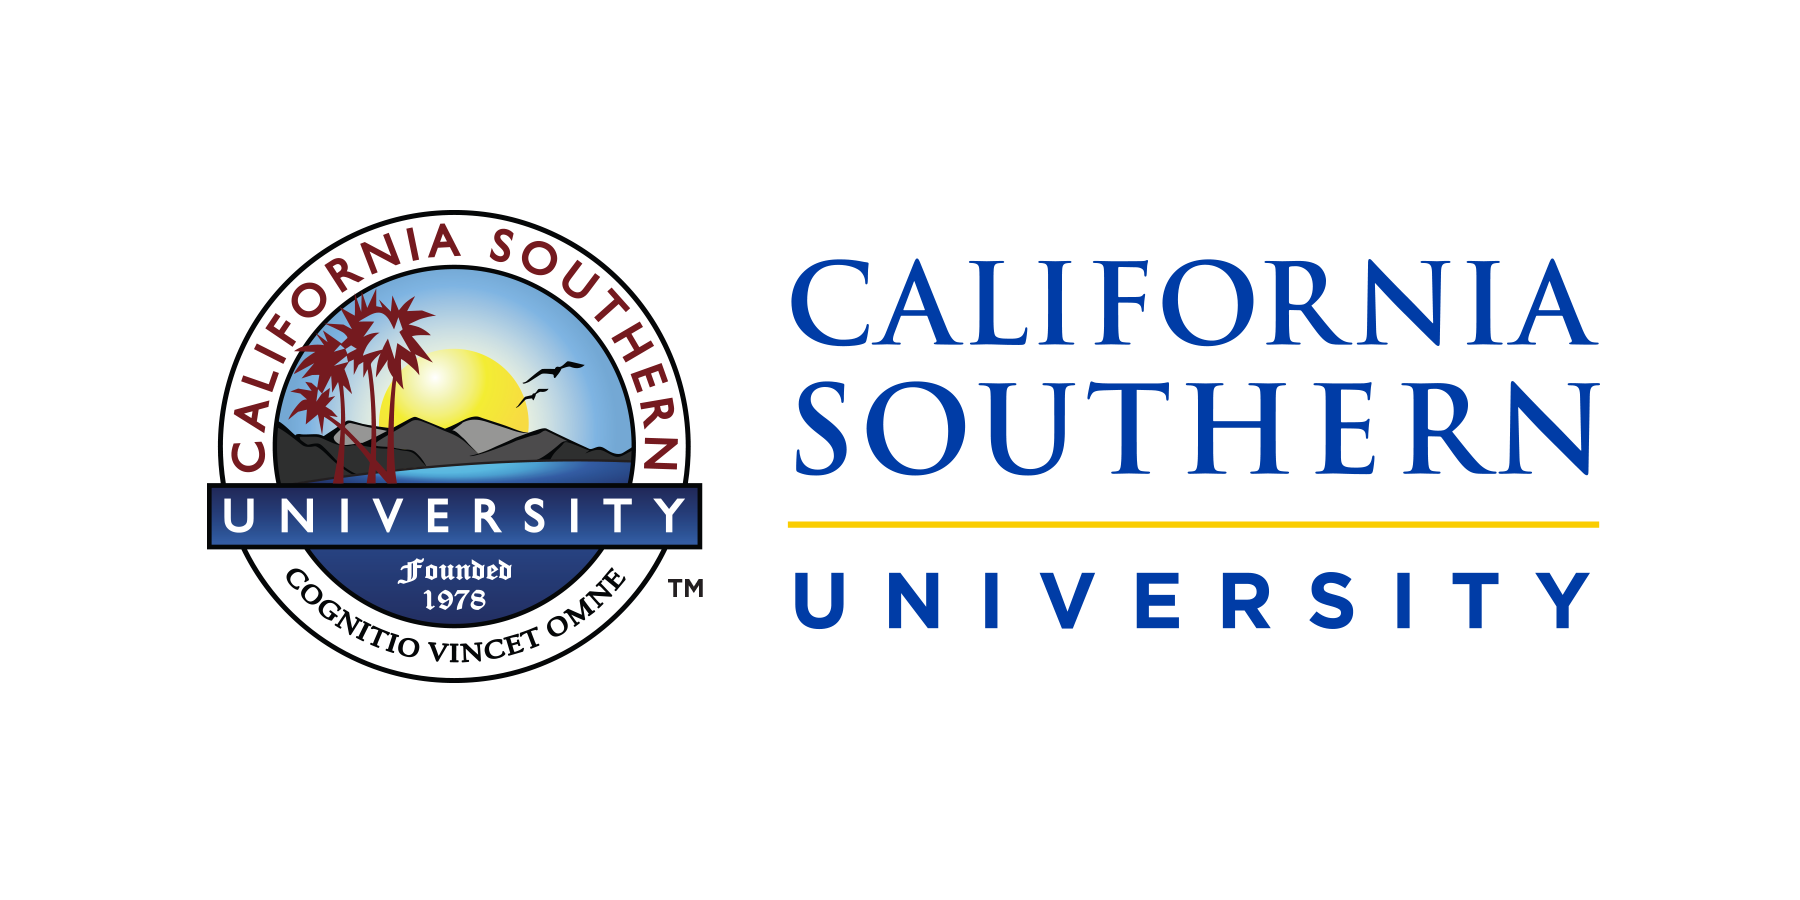 California Southern University Better Business Bureau® Profile